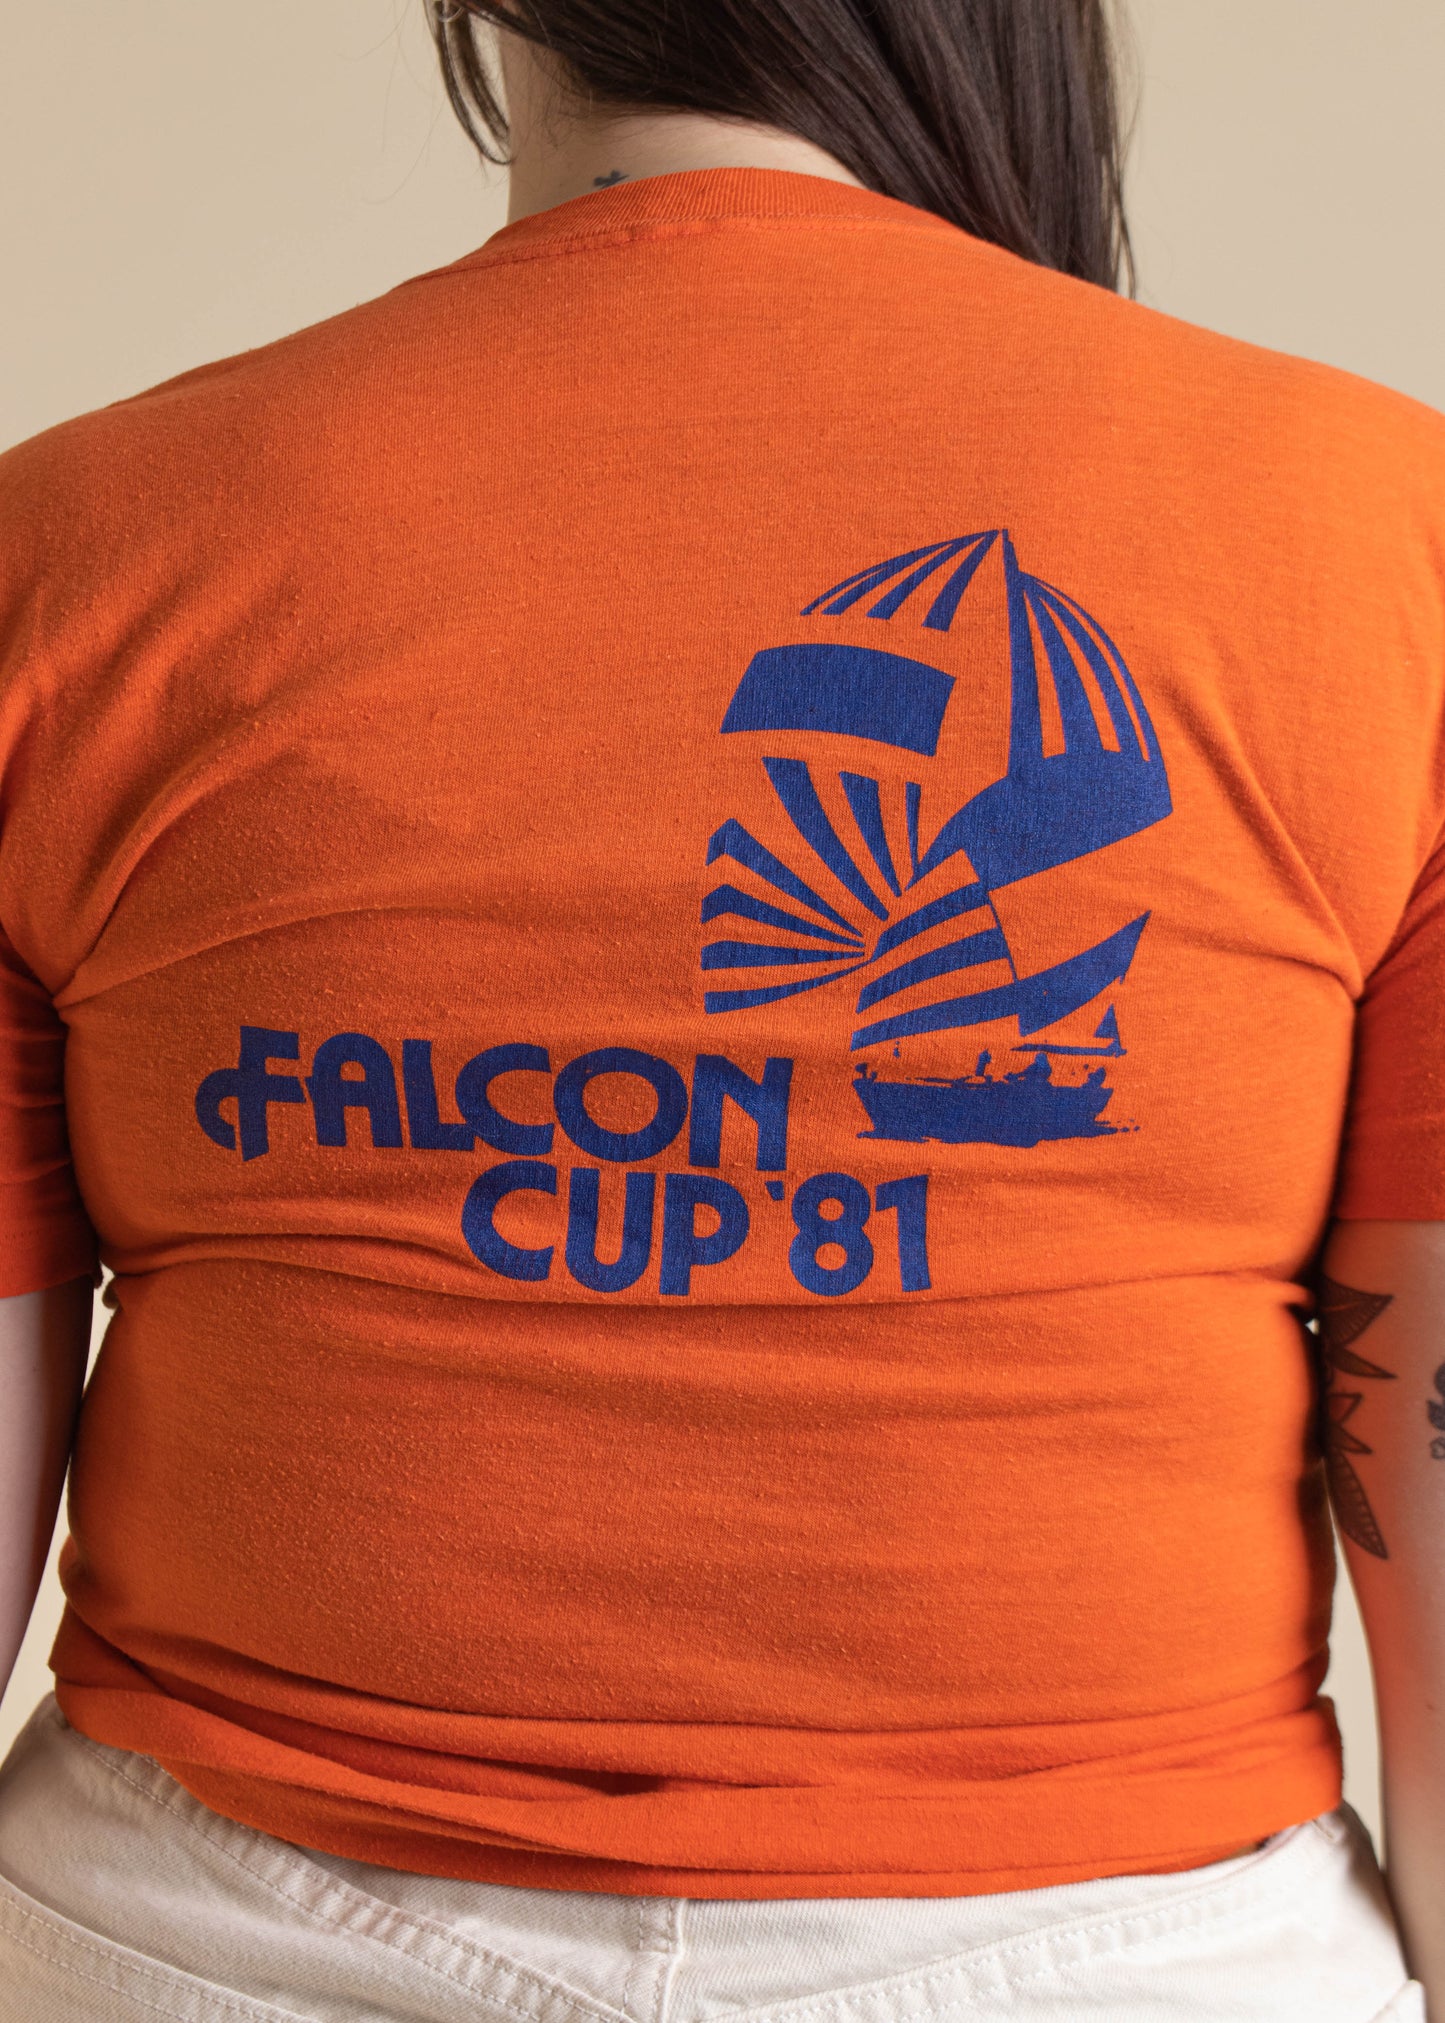 1981 Spruce Falcon Cup T-Shirt Size M/L